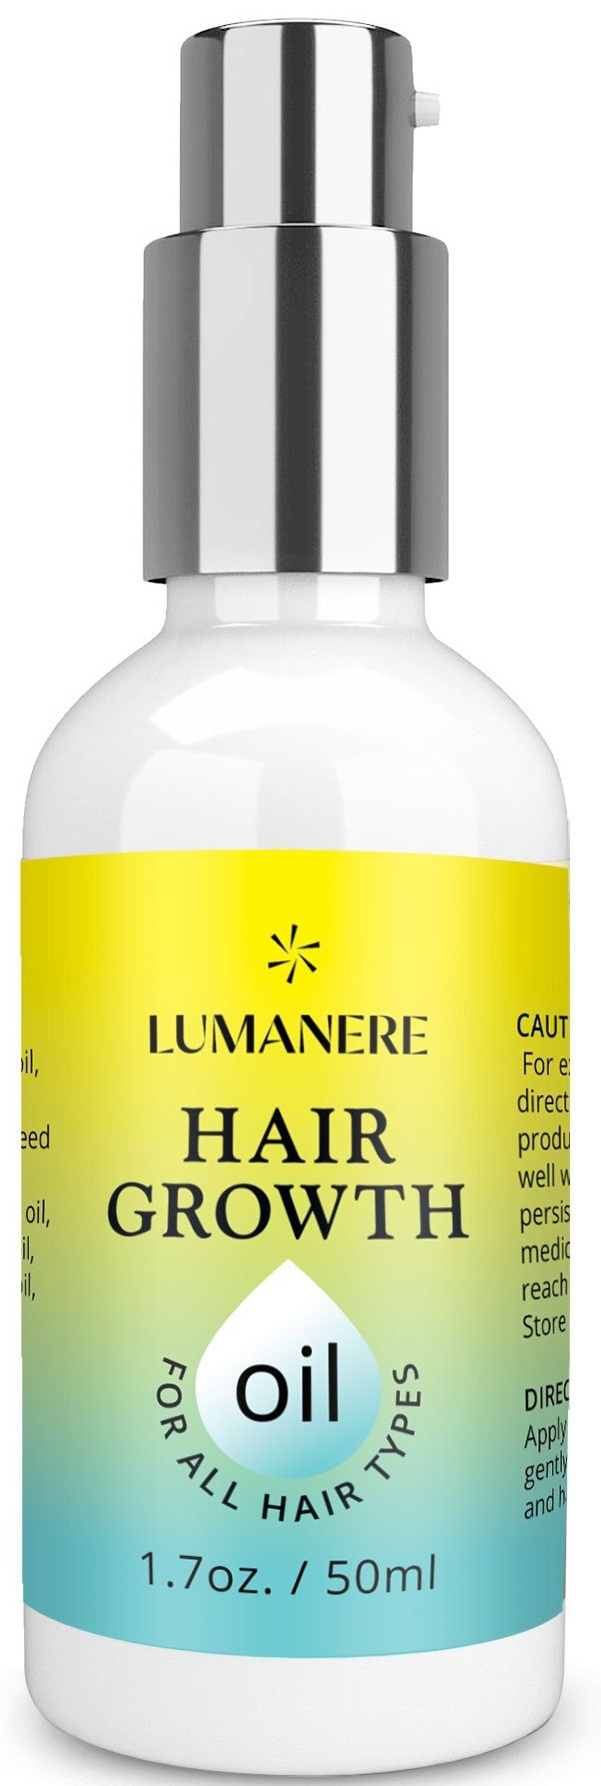 Lumanere Hair Growth Oil